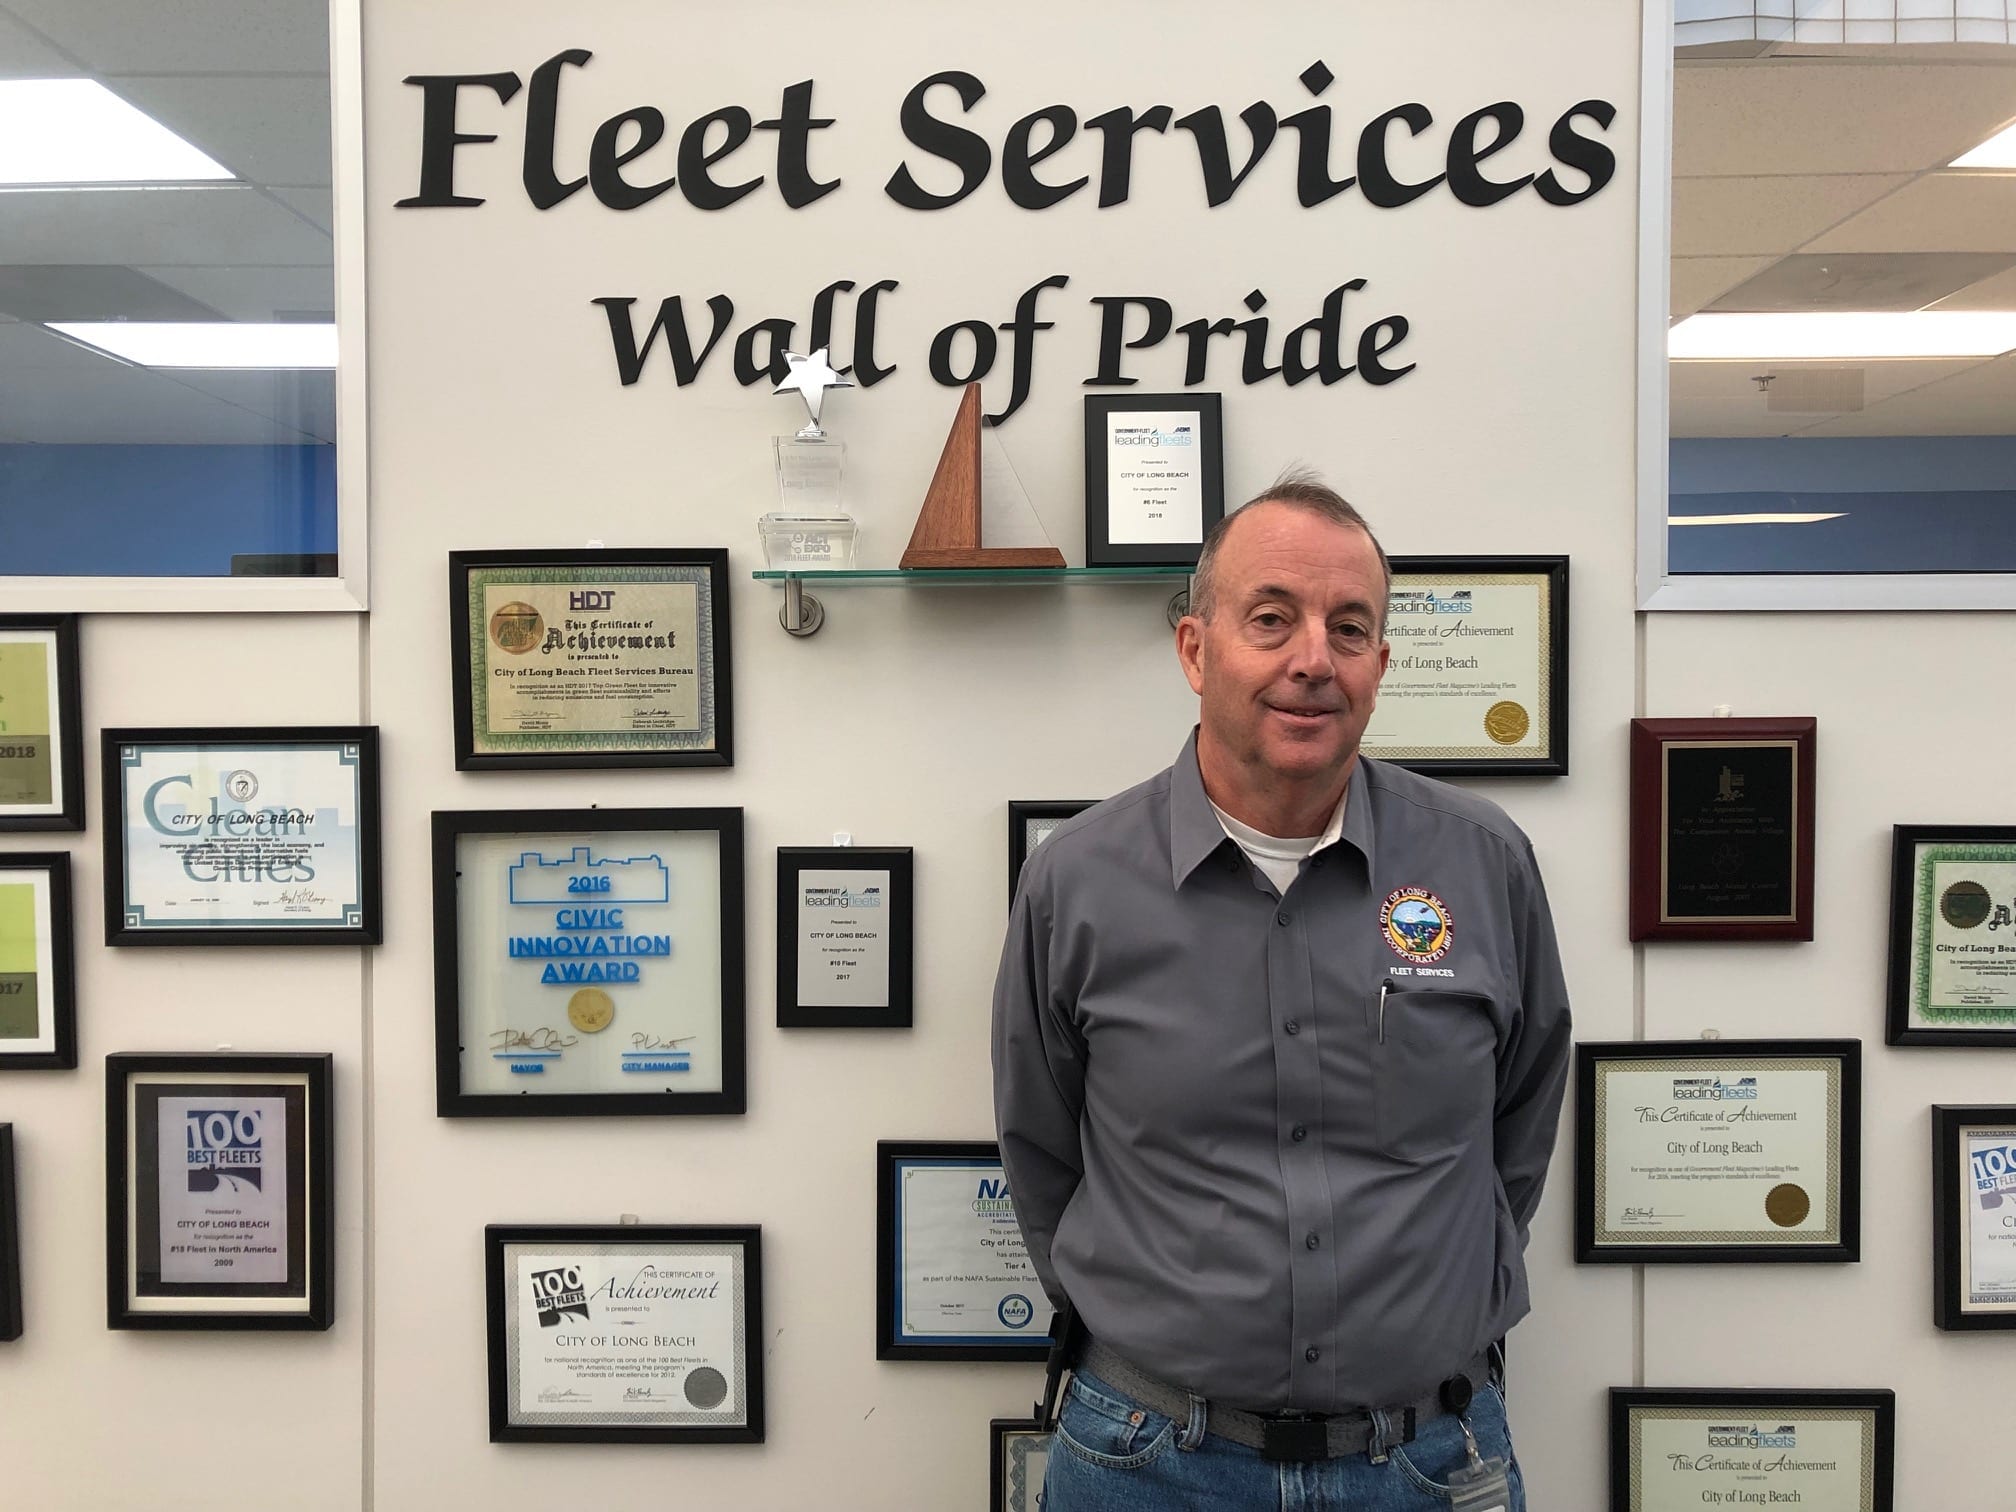 Dan Berlenbach Stands at Fleet Services Wall of Pride